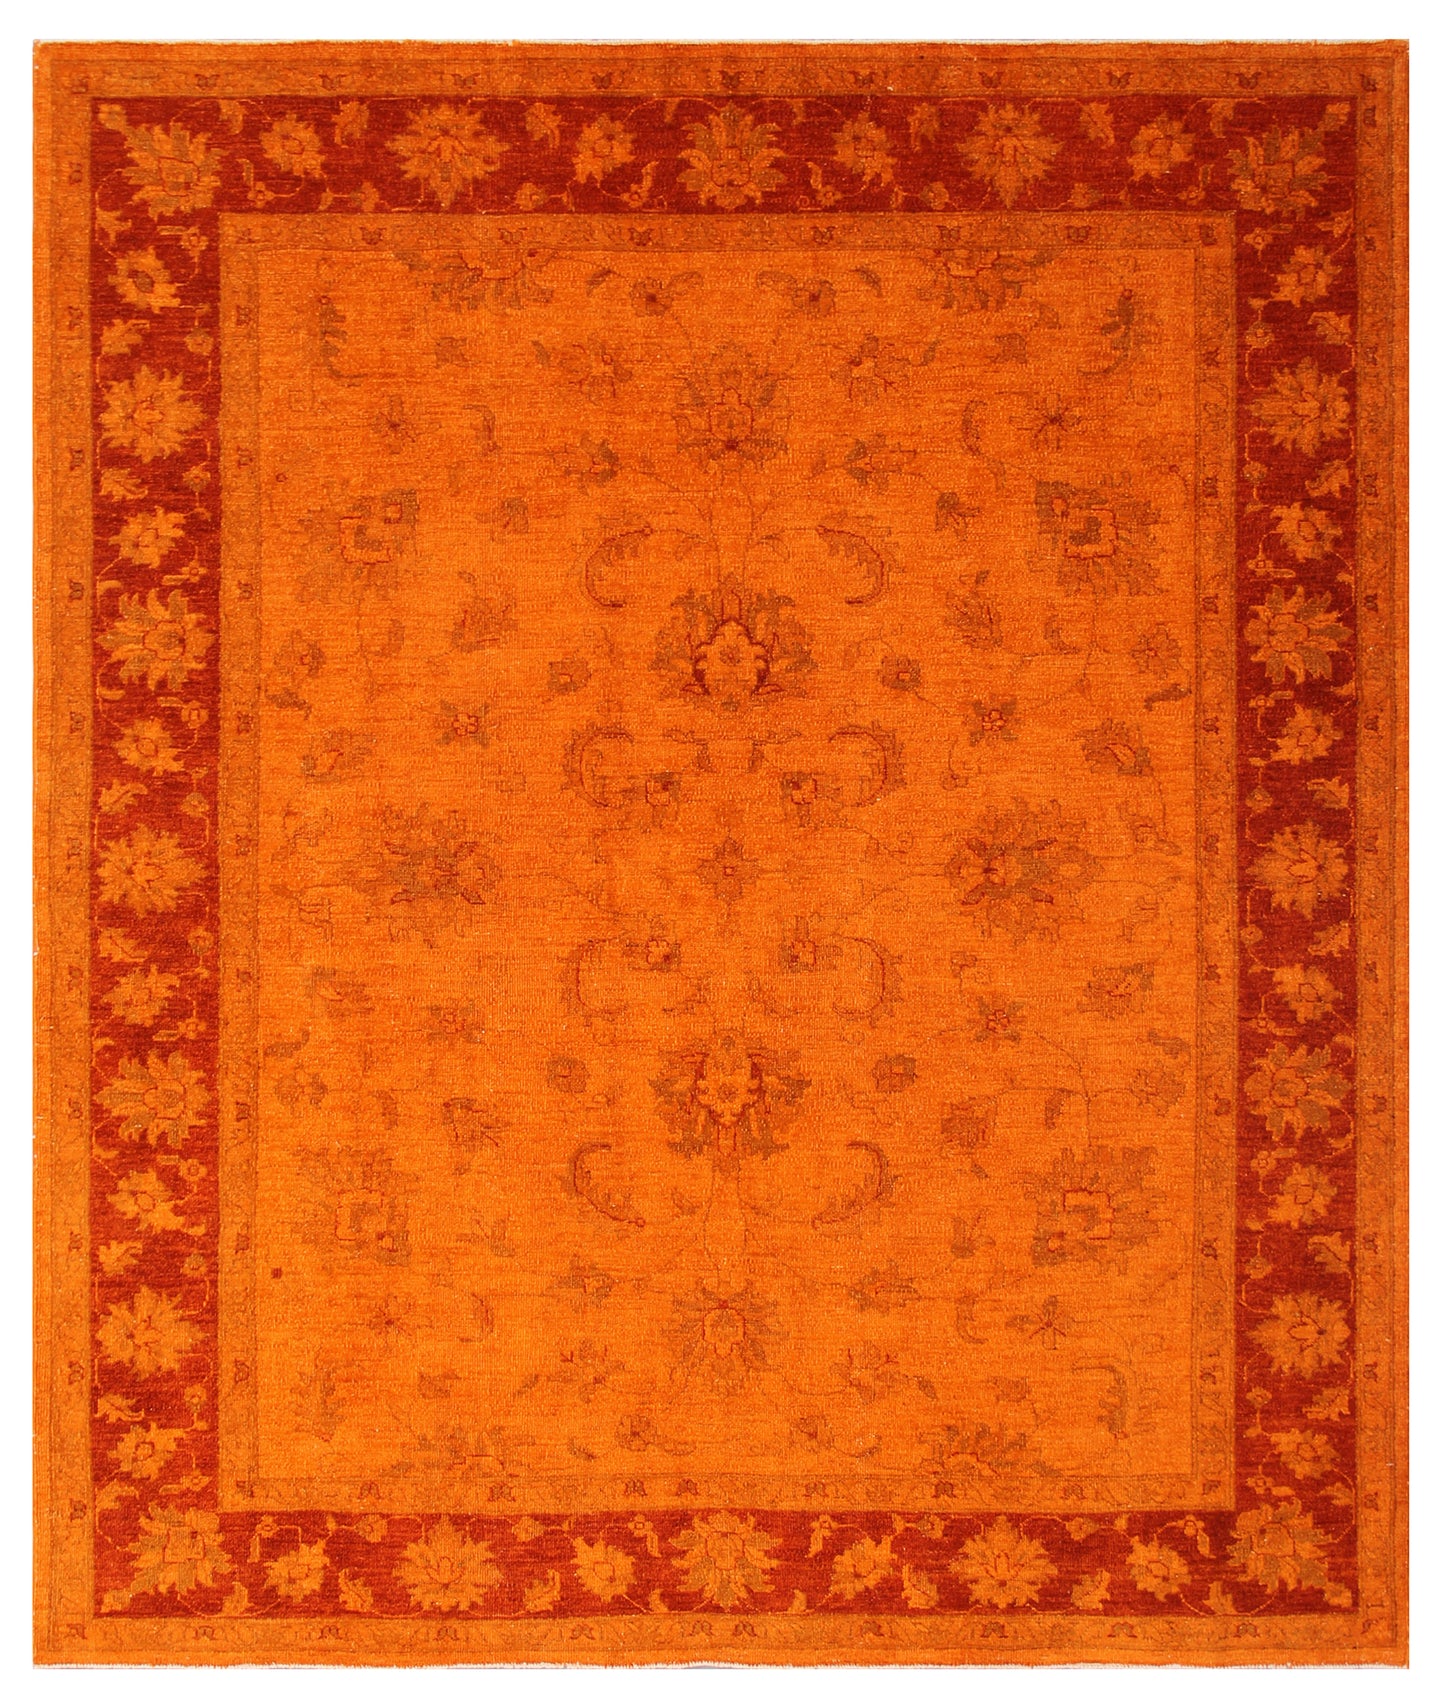 6'x8' Orange Persian Design Ariana Overdyed Rug